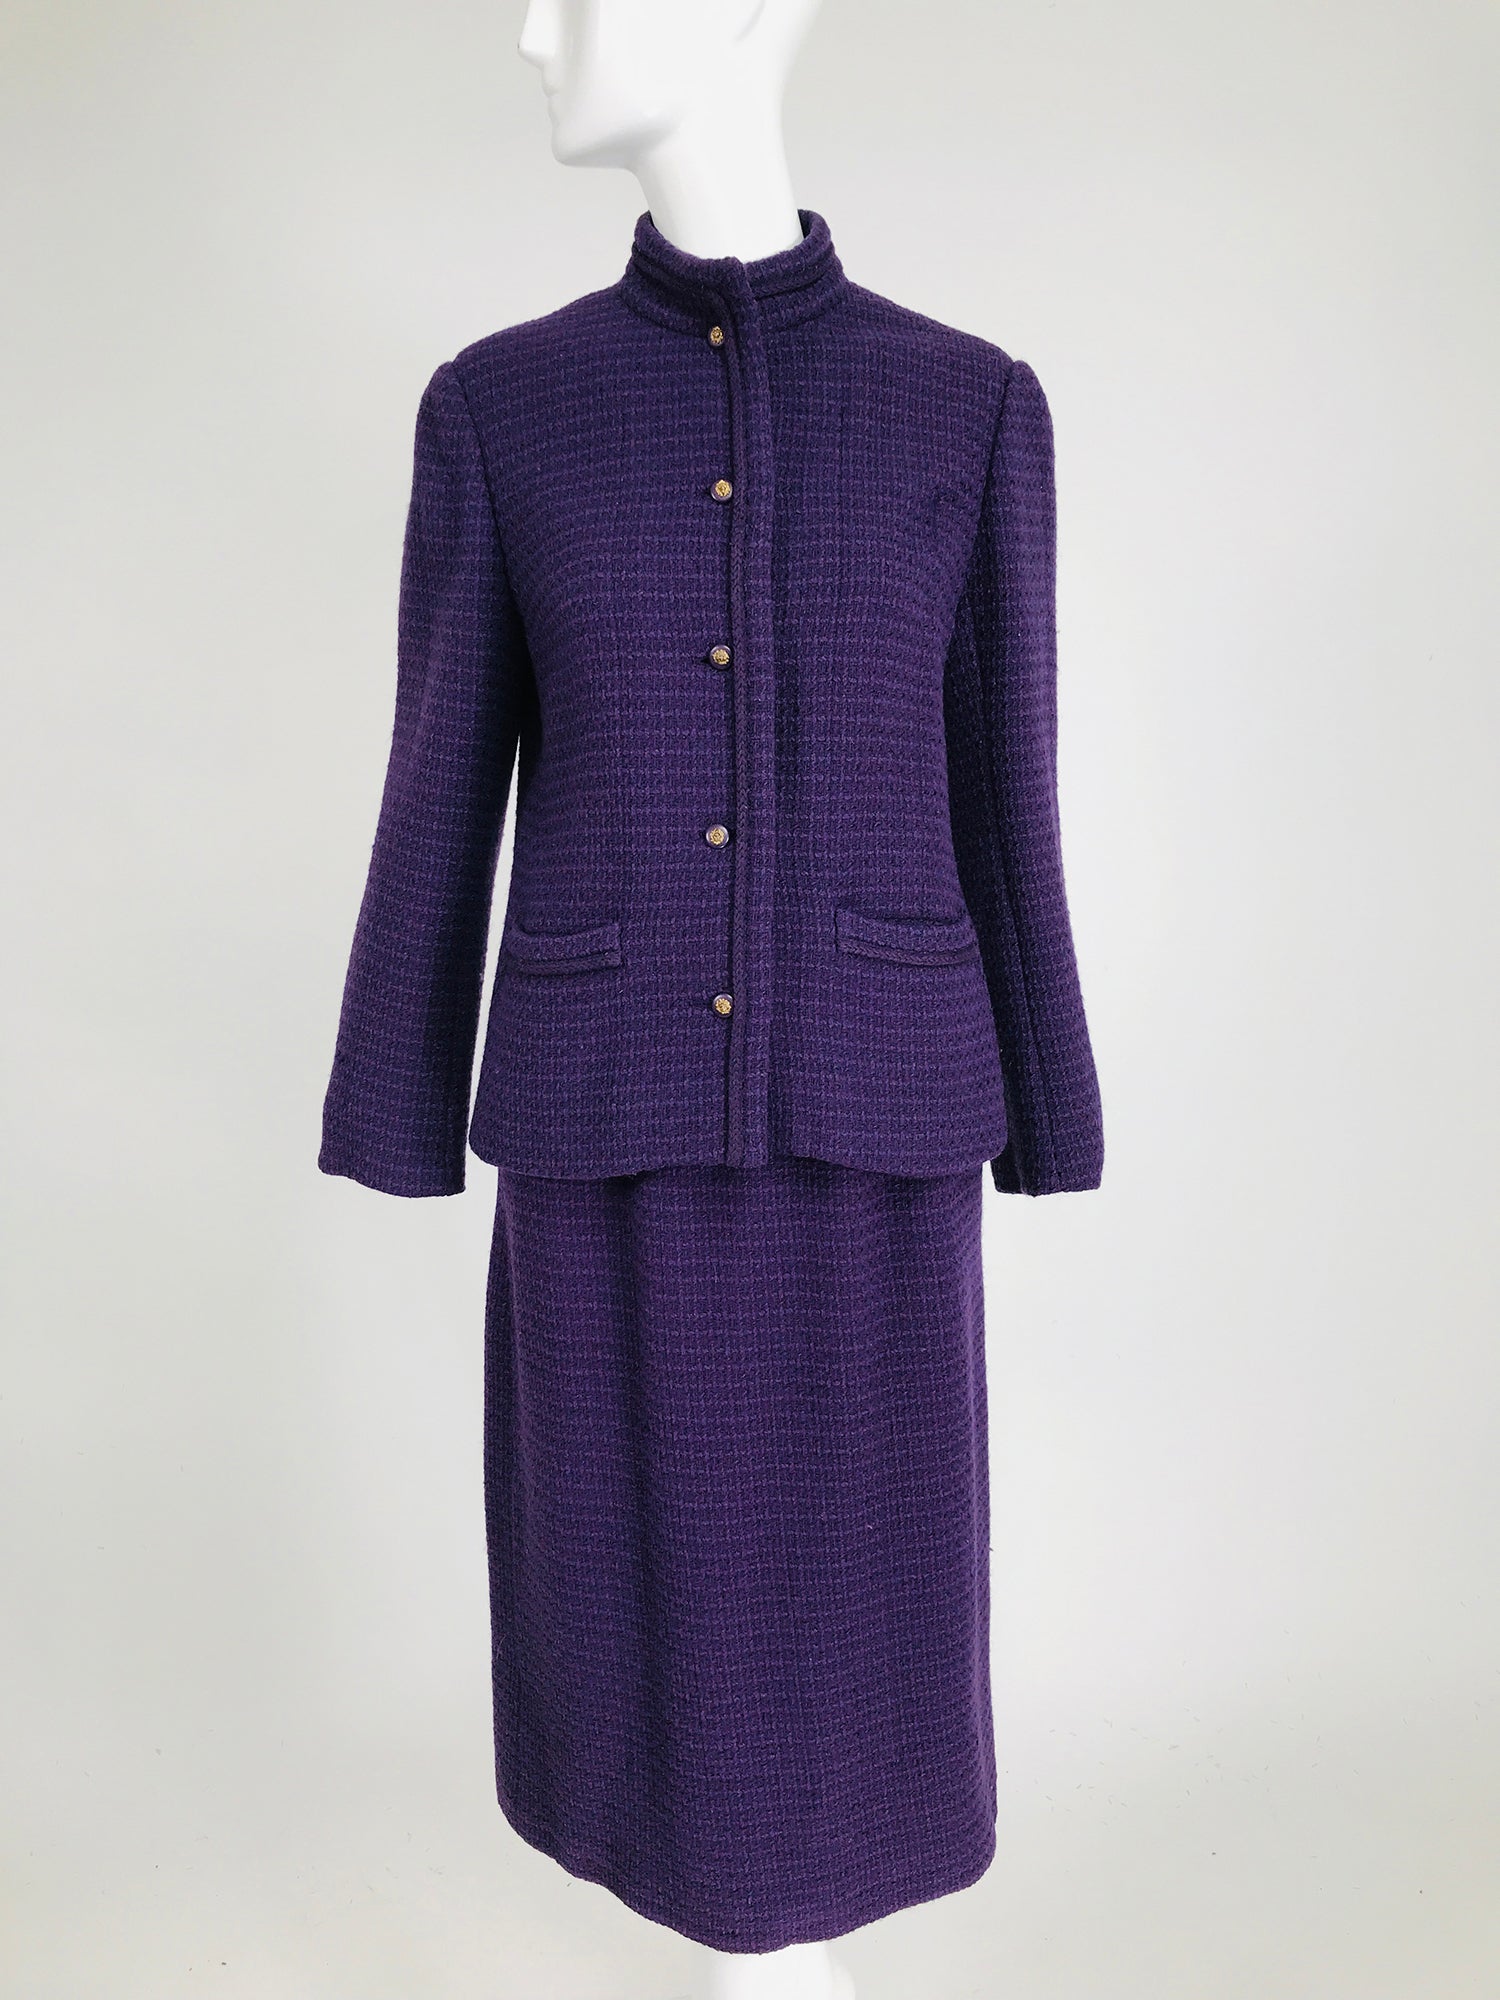 Chanel Vintage 2-Piece Jacket and Skirt Suit Set